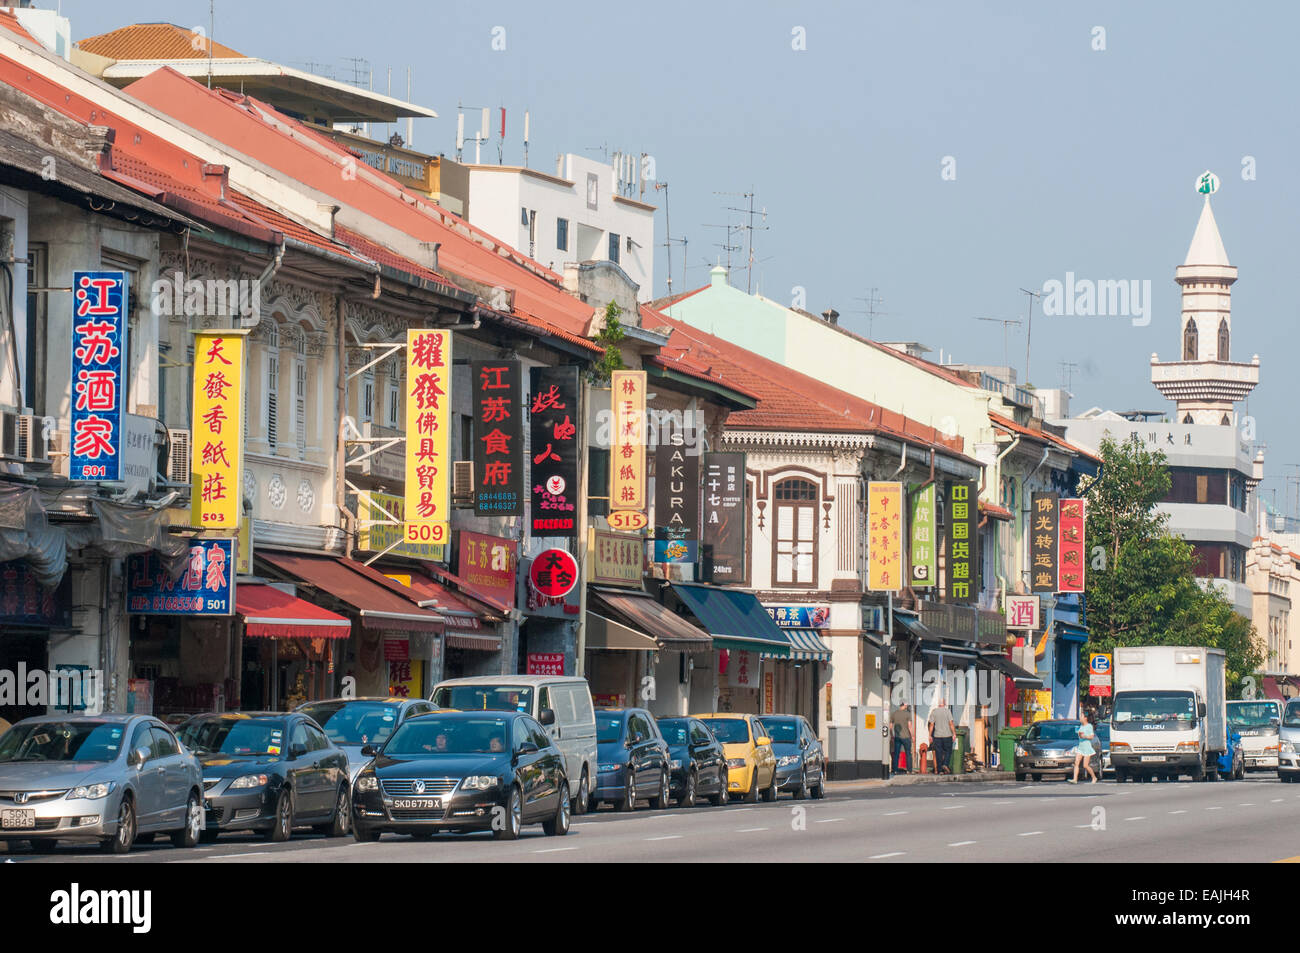 Street scene in Geylang Road, Singapore Stock Photo